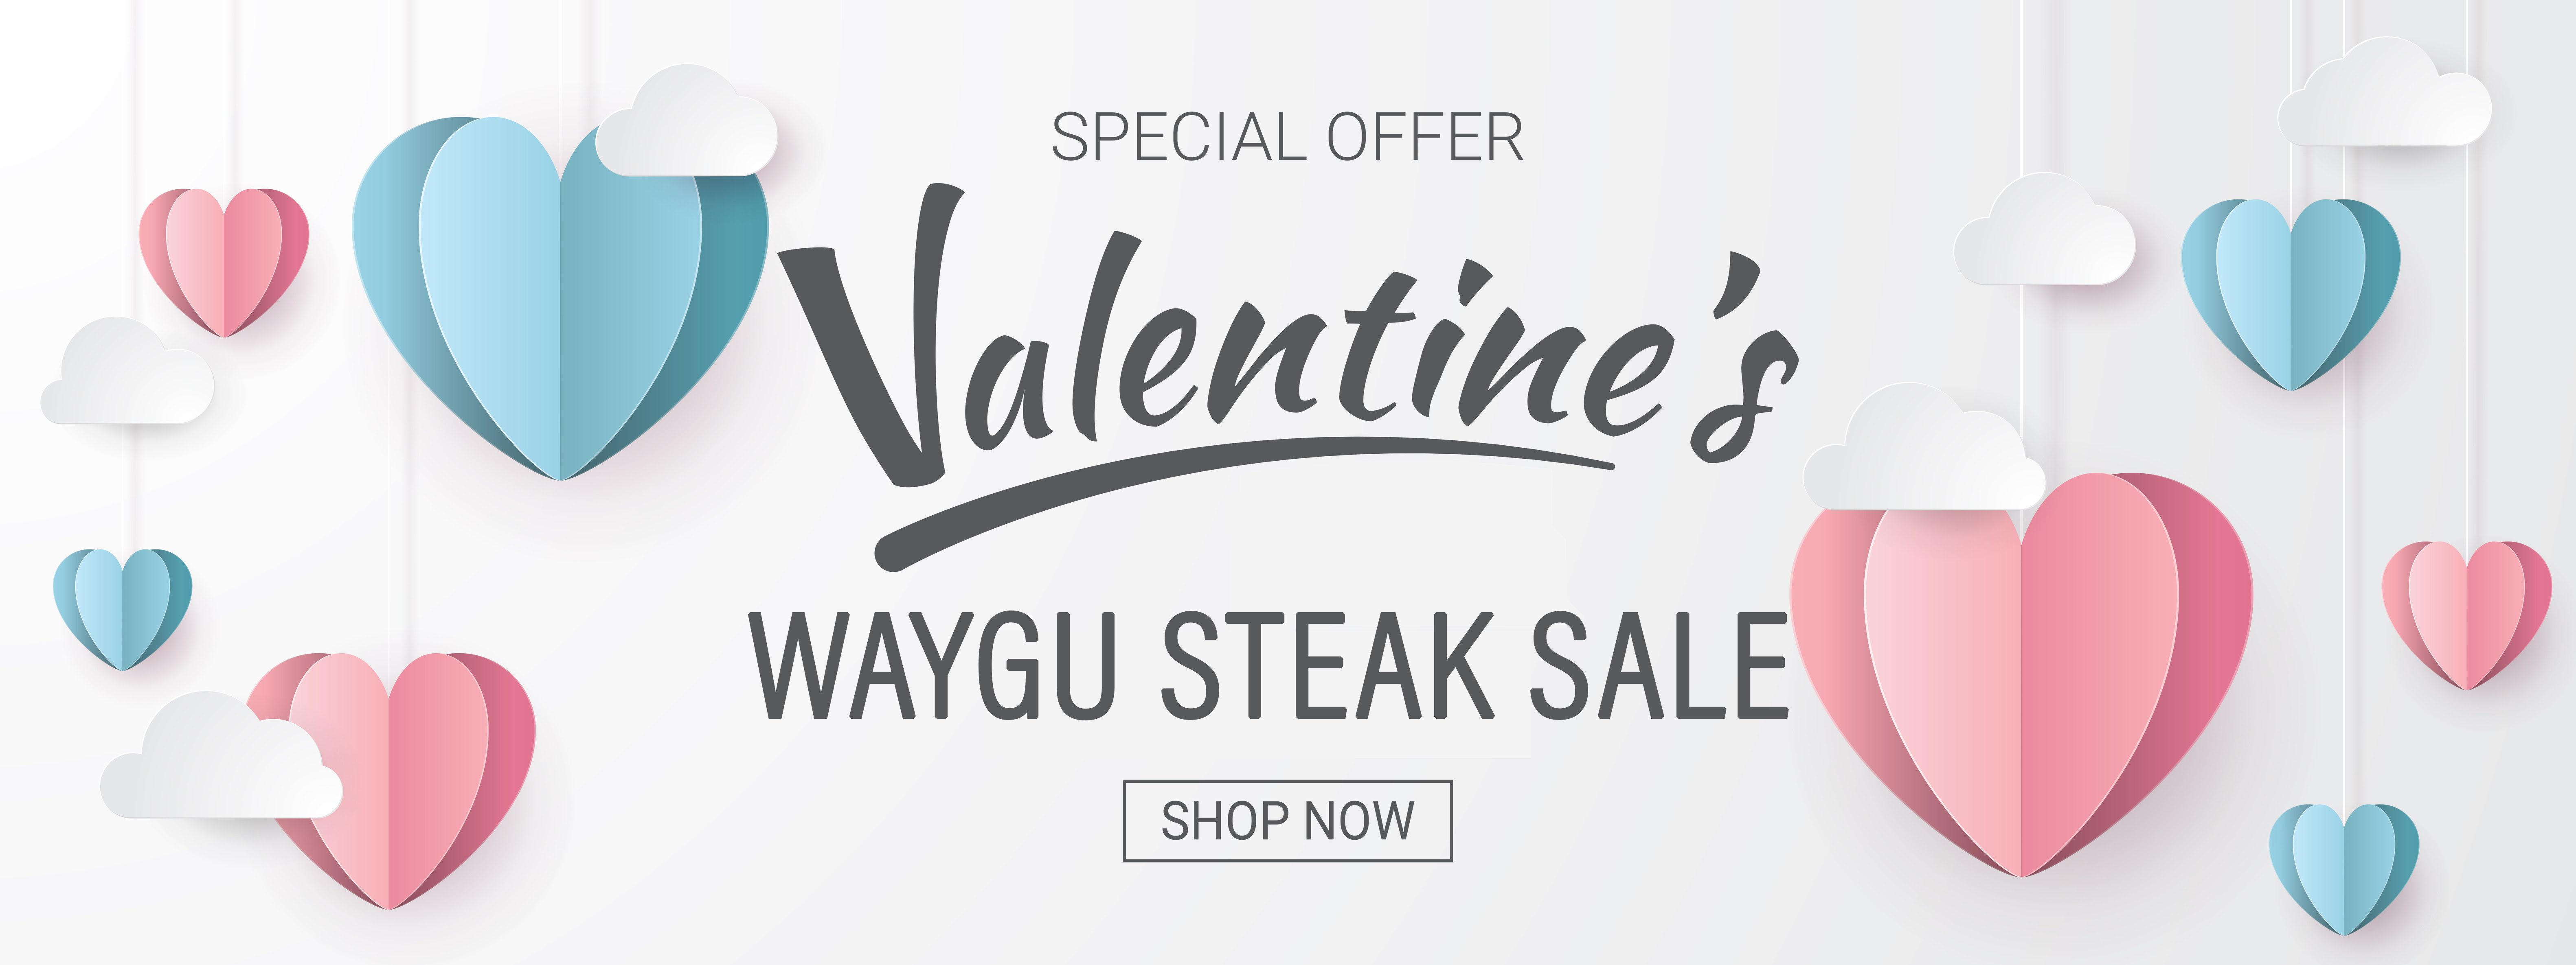 Wagyu Steaks On Sale Now